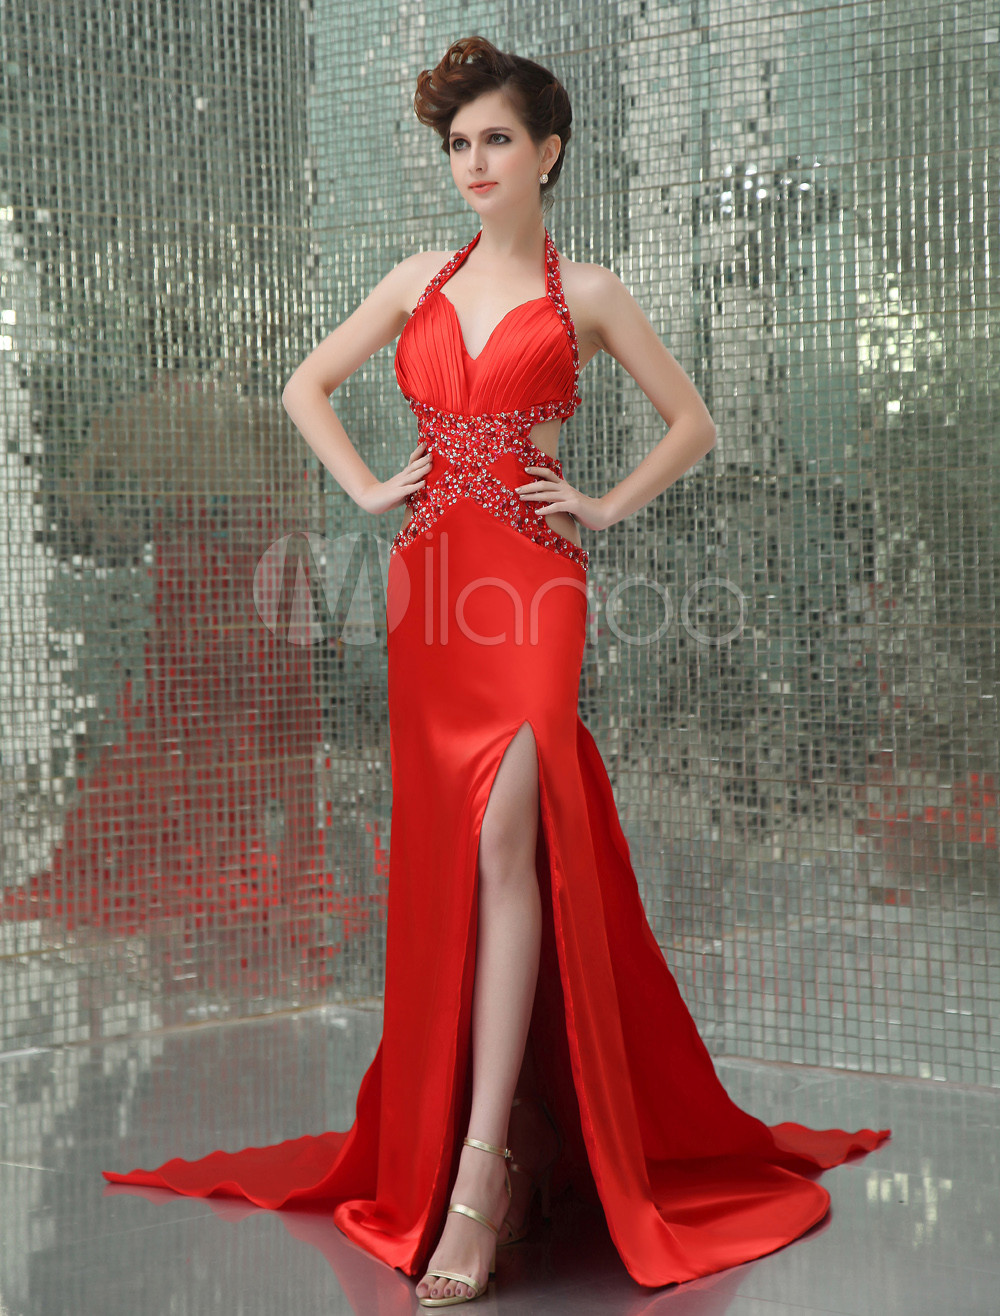 Hot Red Elastic Woven Satin Halter Prom Dress (Wedding Prom Dresses) photo